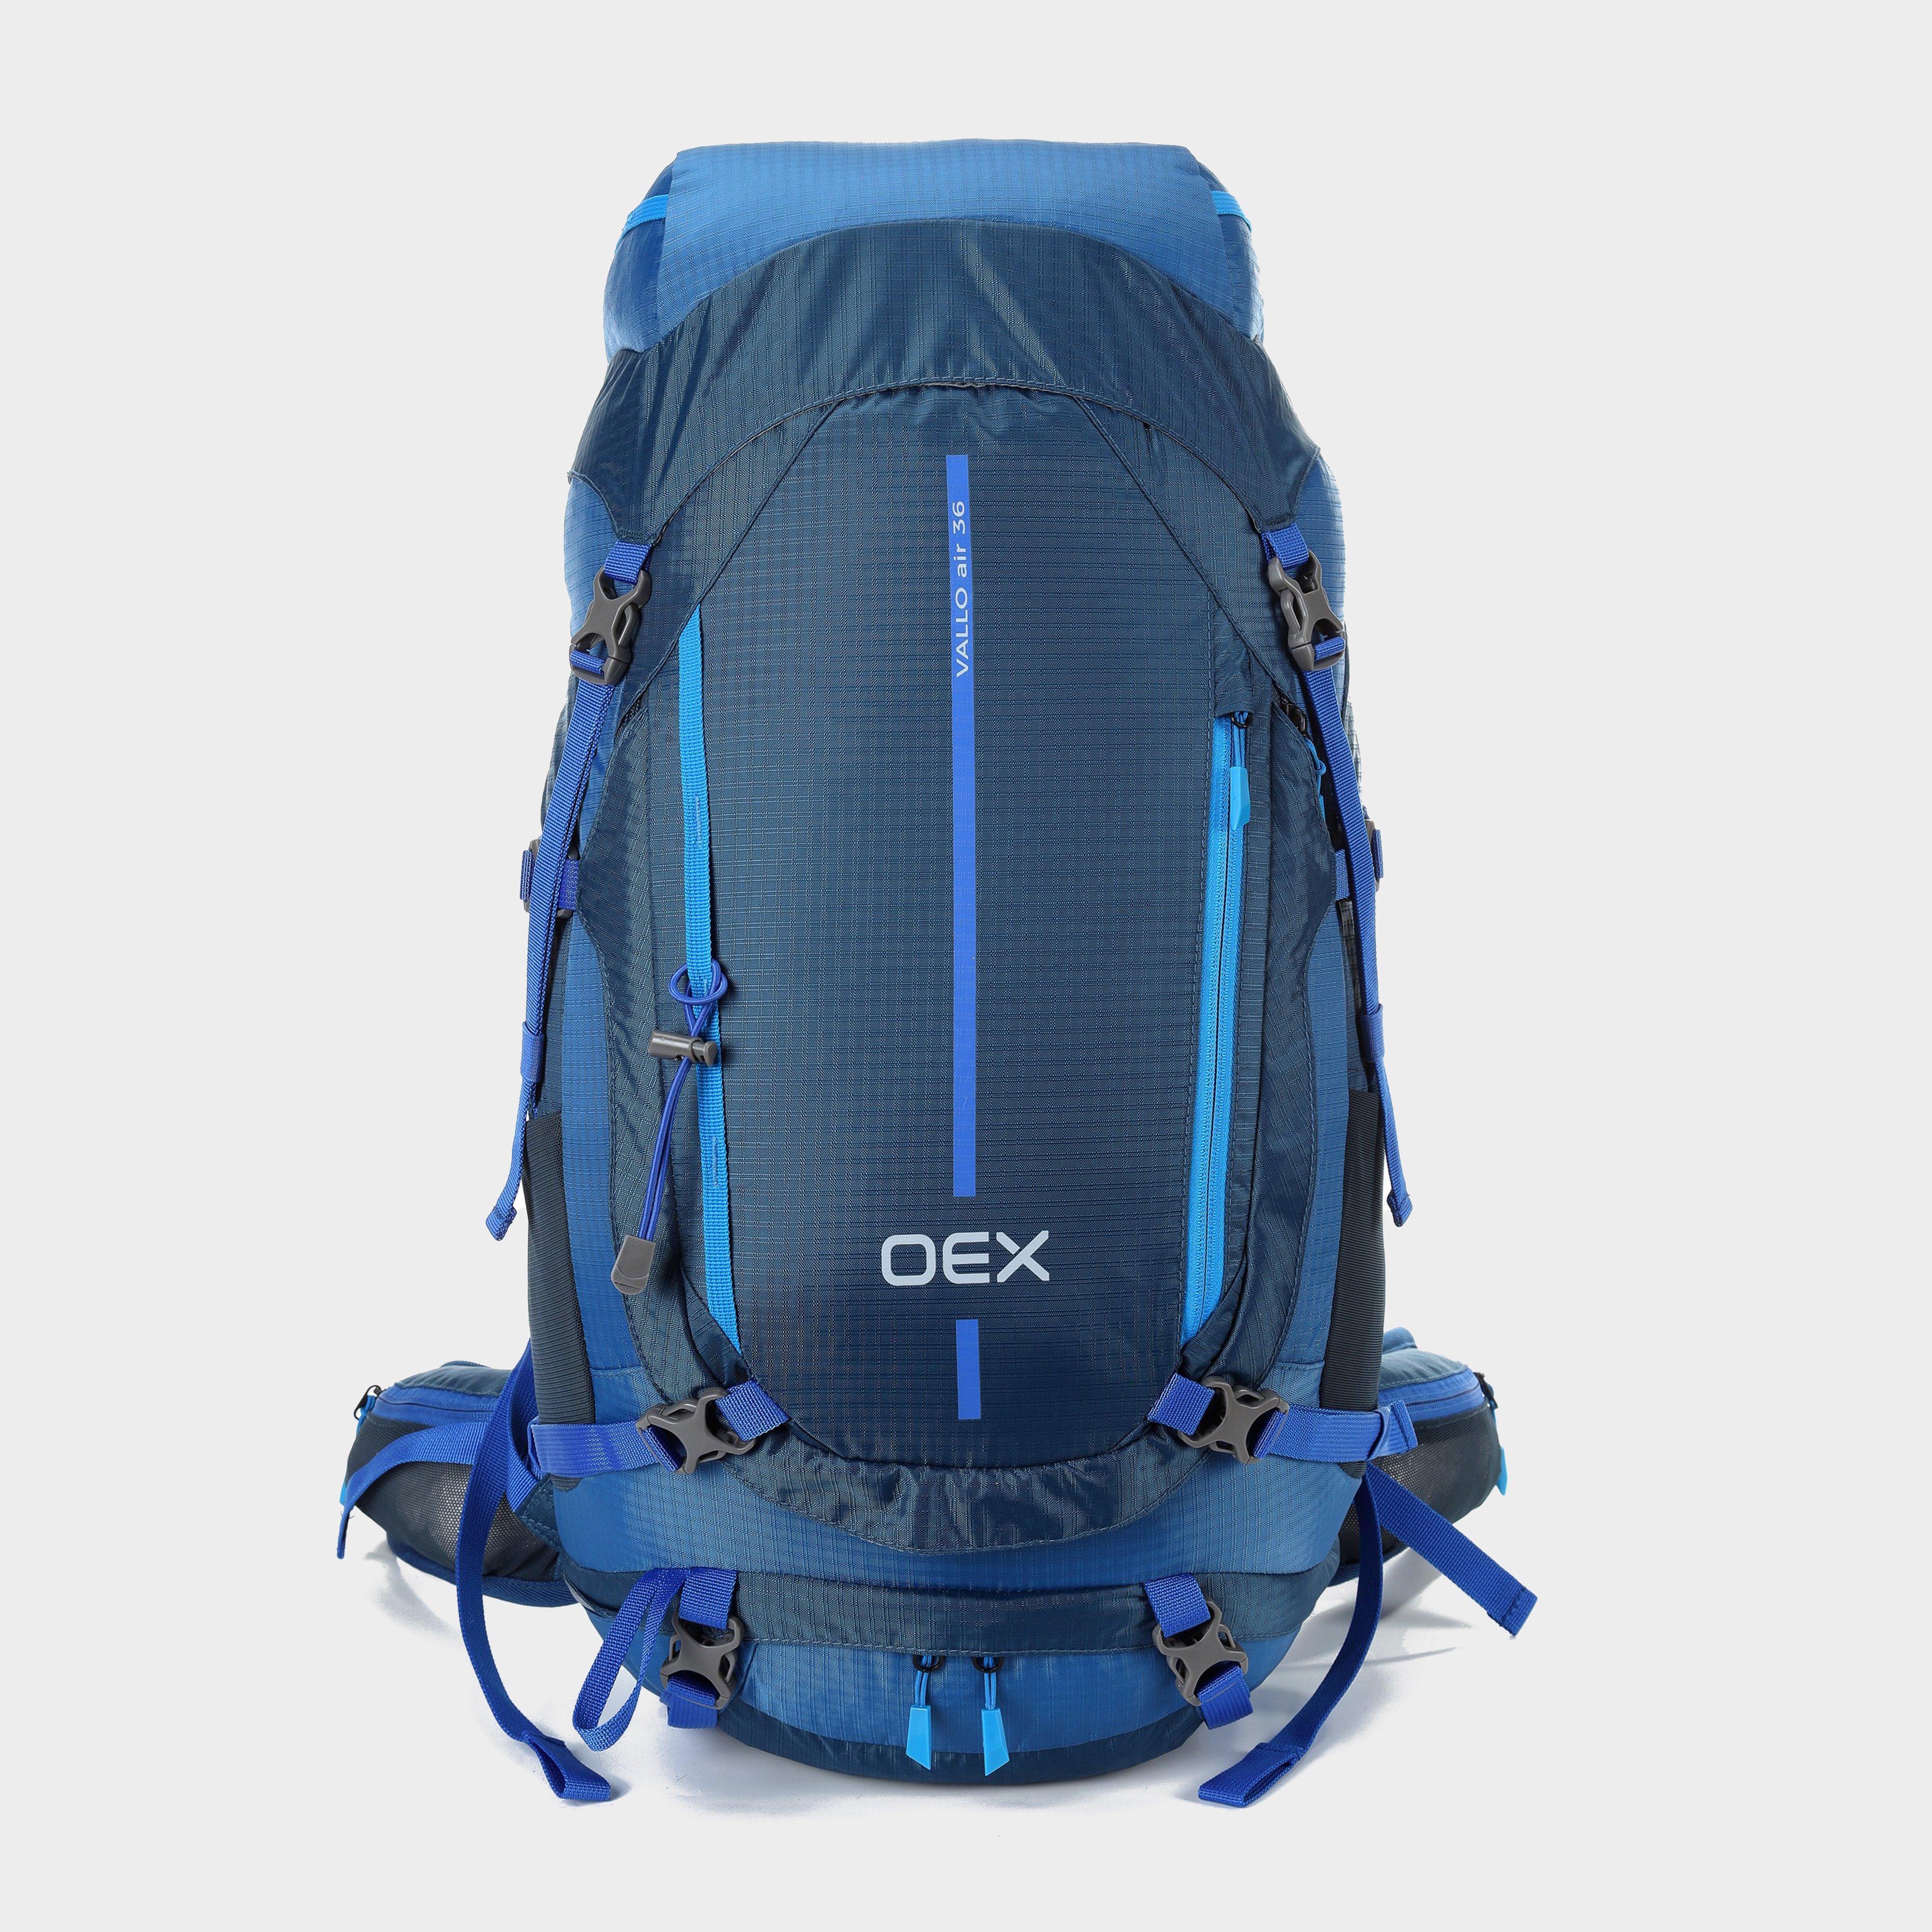 Osprey Quasar Backpack (28L) Review